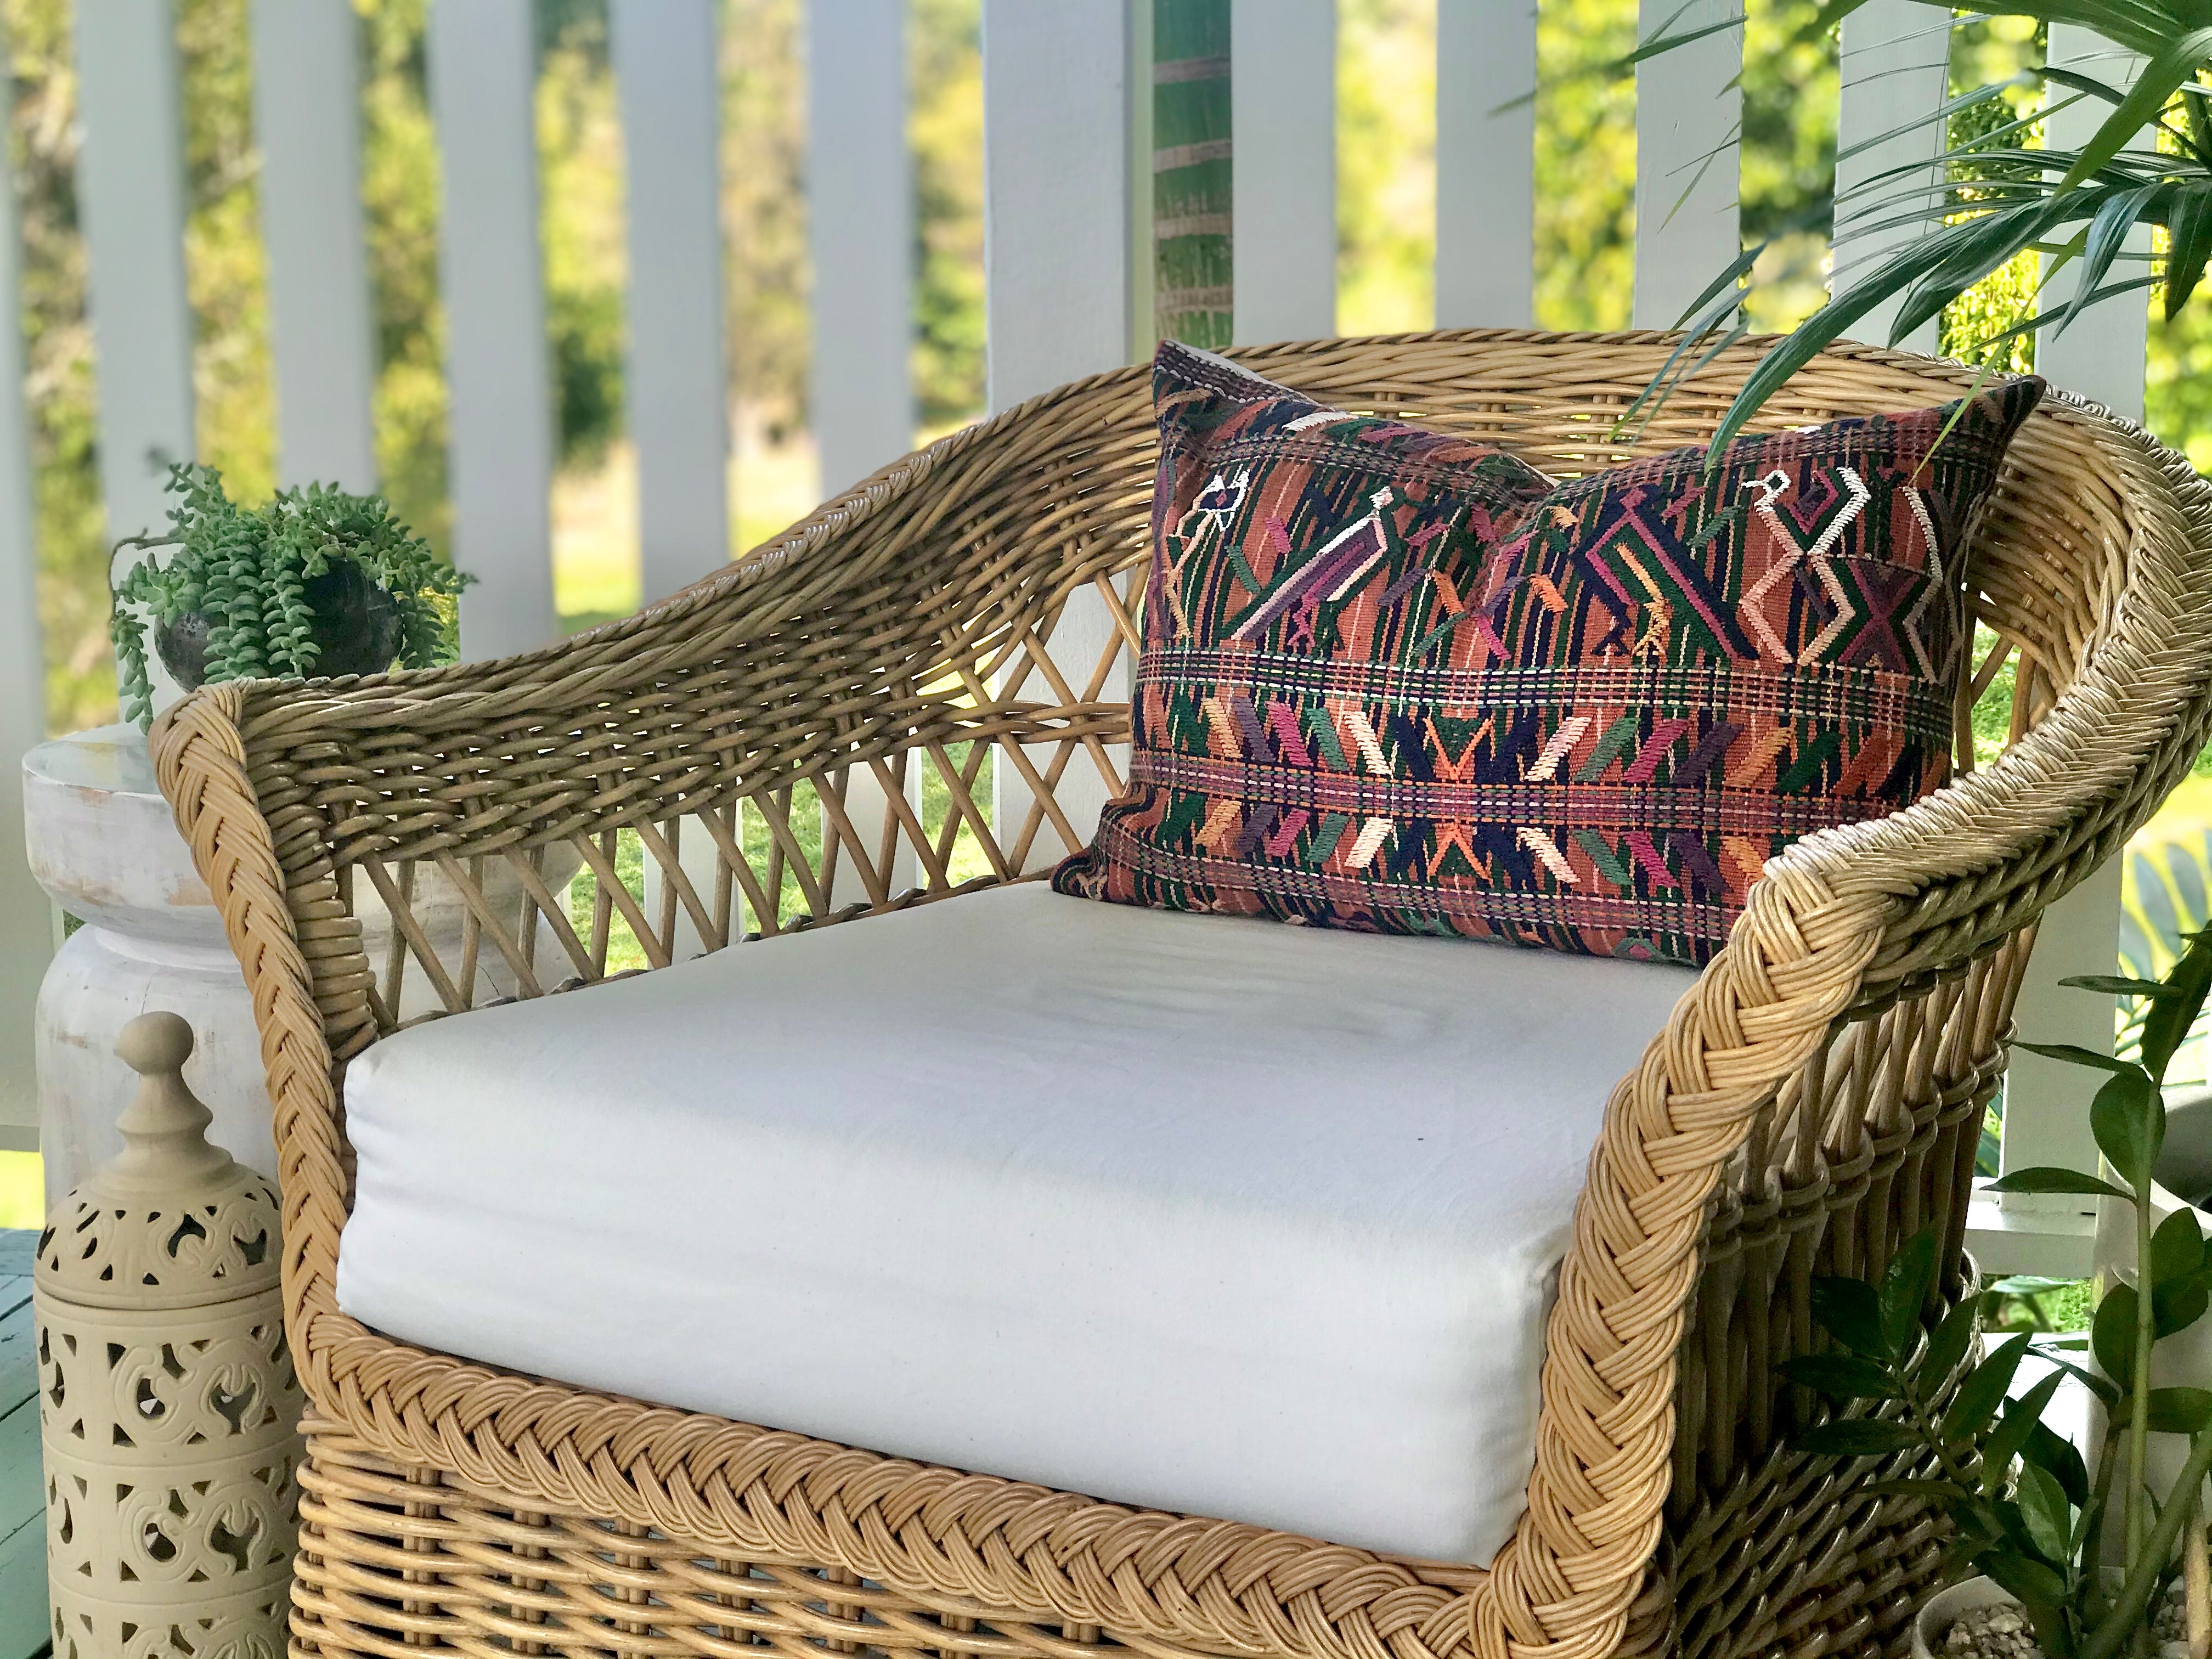 Guatemalan Textile Pillow, Vintage, hand woven coral lumbar cushion from Nebaj